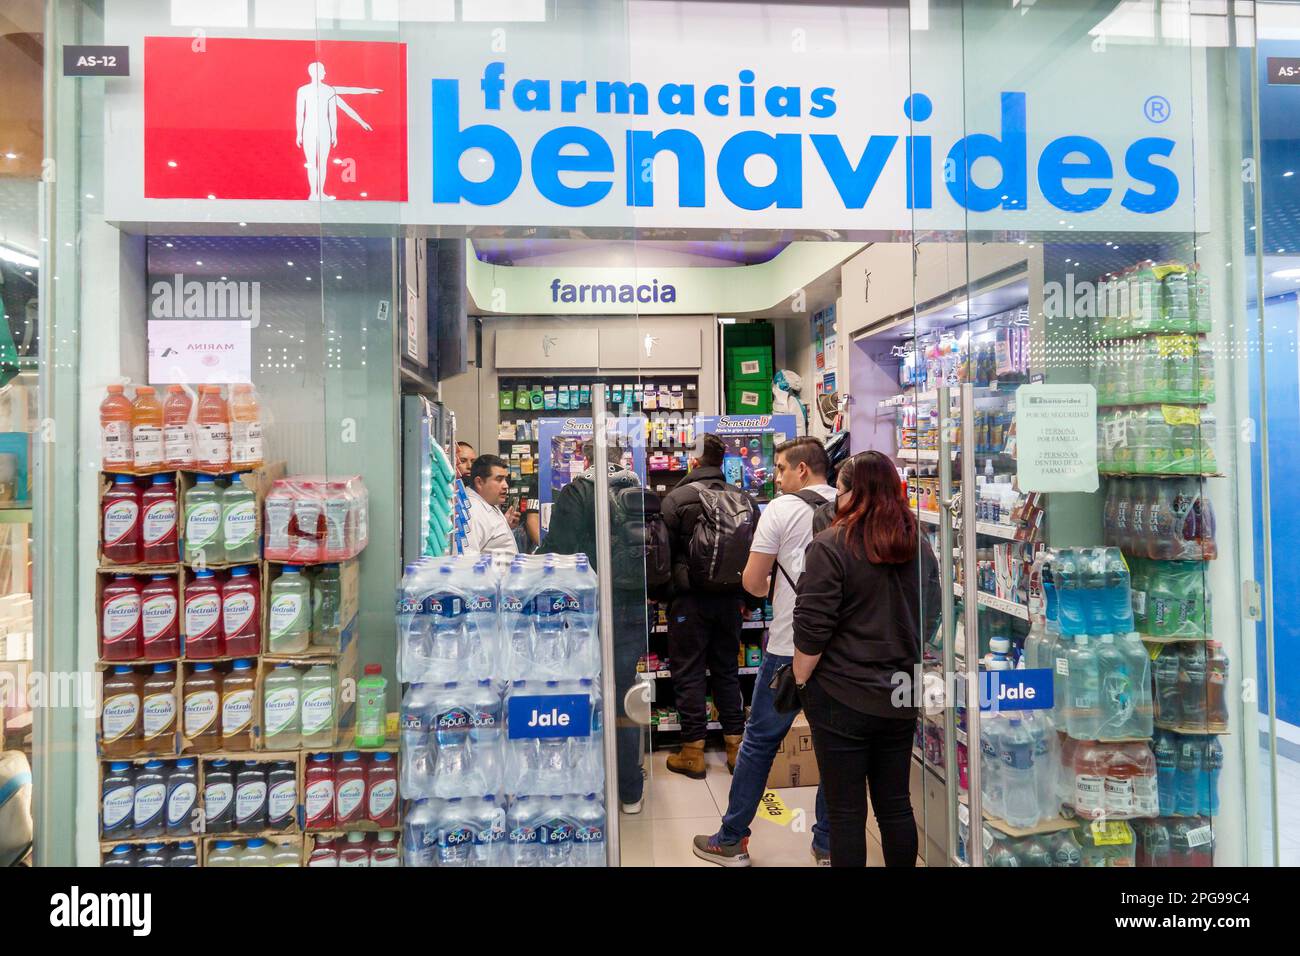 Città del Messico, Aeropuerto Internacional Benito Juarez International Airport, terminal concourse, passeggeri viaggiatori, farmacie Farmacias Benavides farmacia Foto Stock